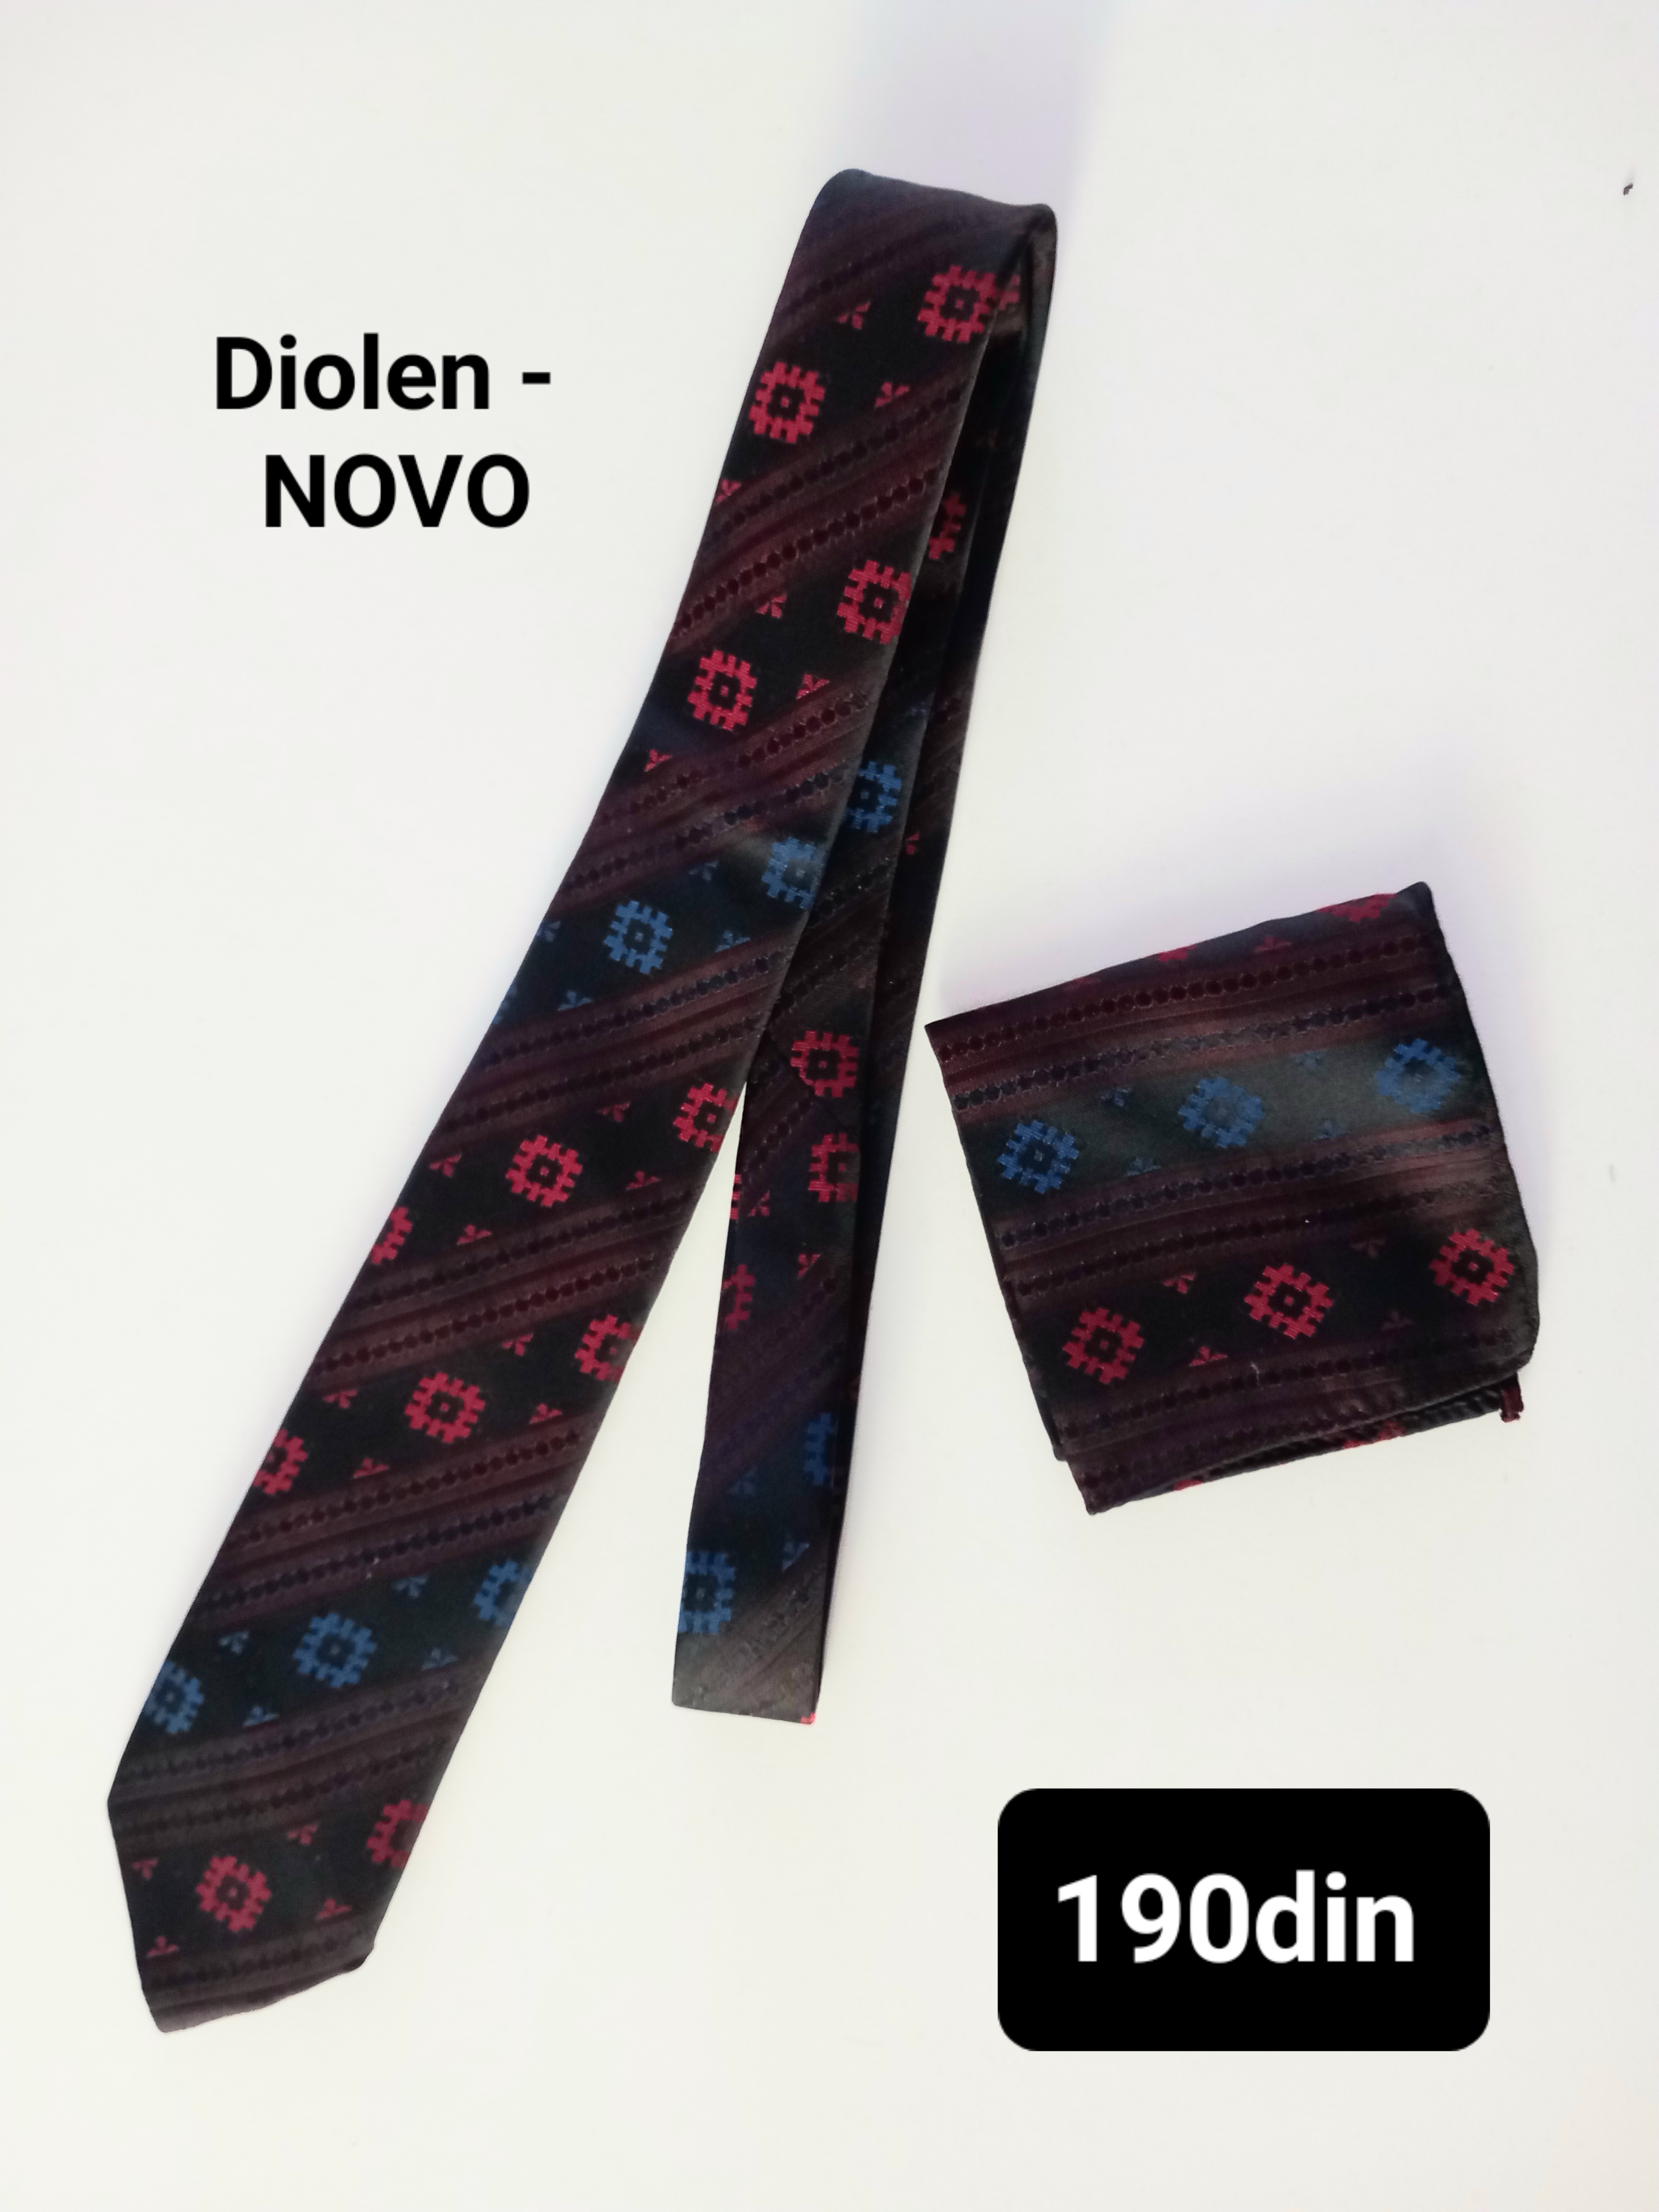 Diolen muška kravata i maramica - NOVO